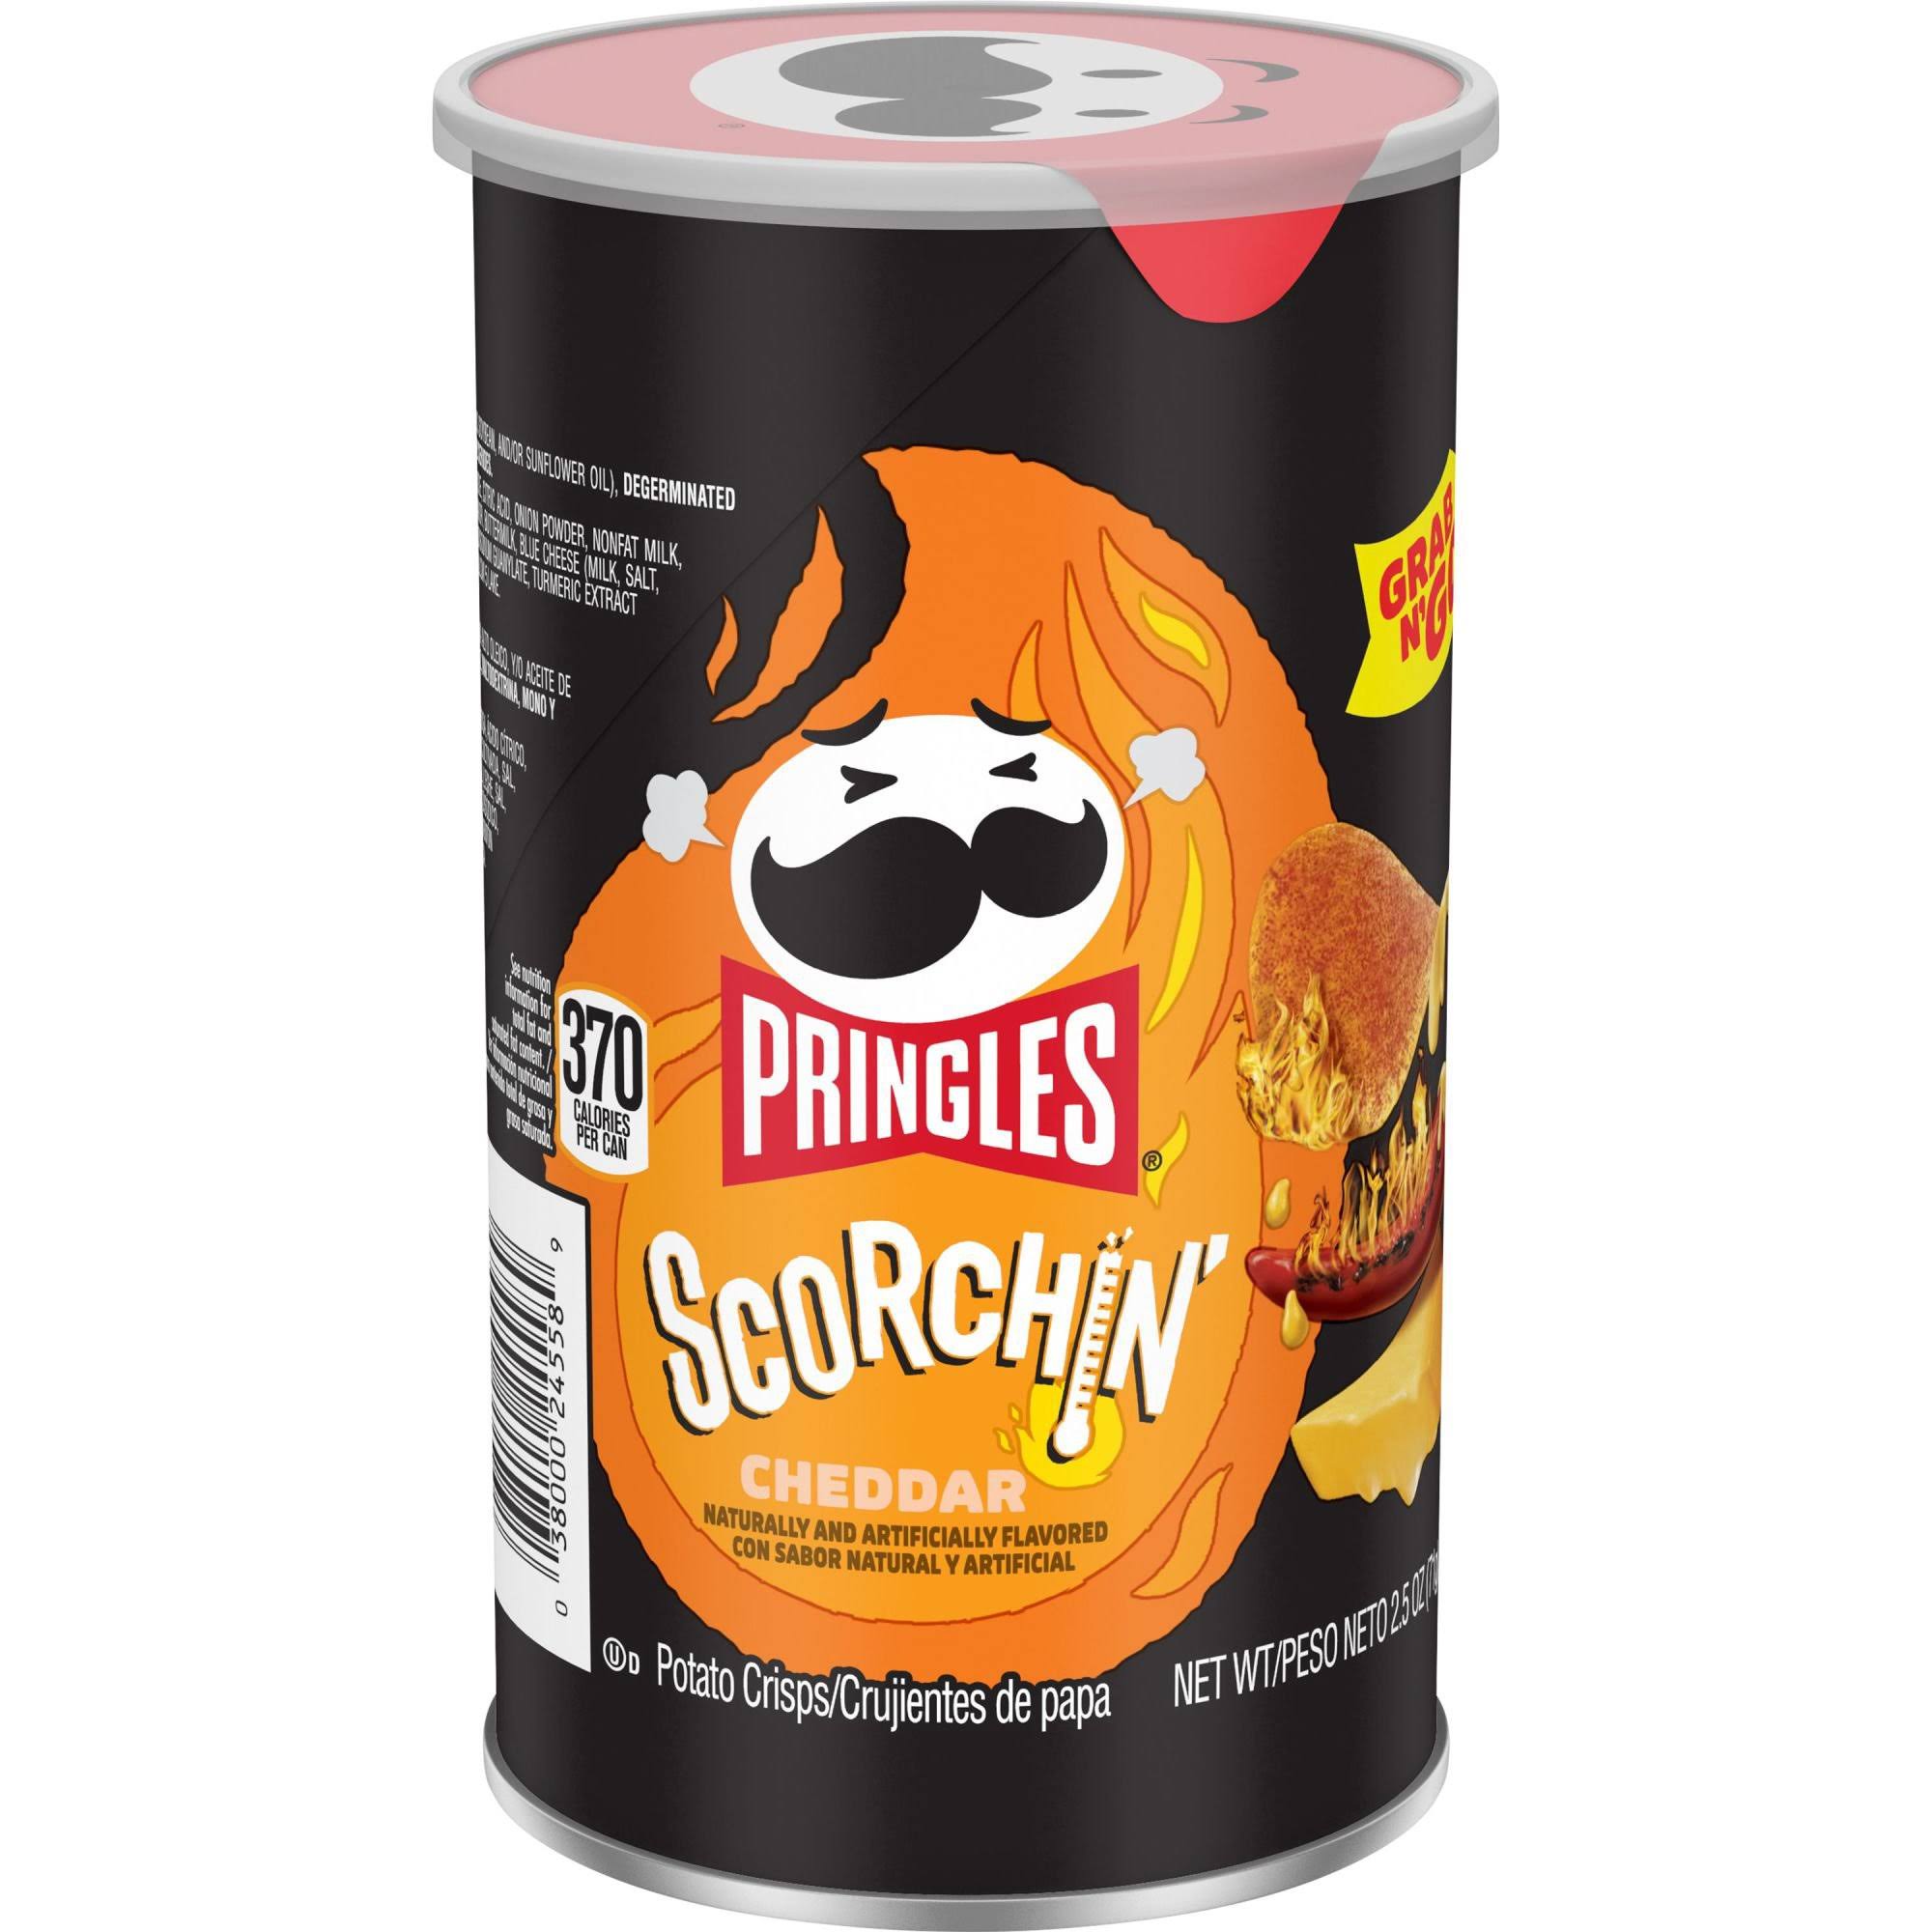 Pringles Scorchin' Cheddar Grab and Go 71g